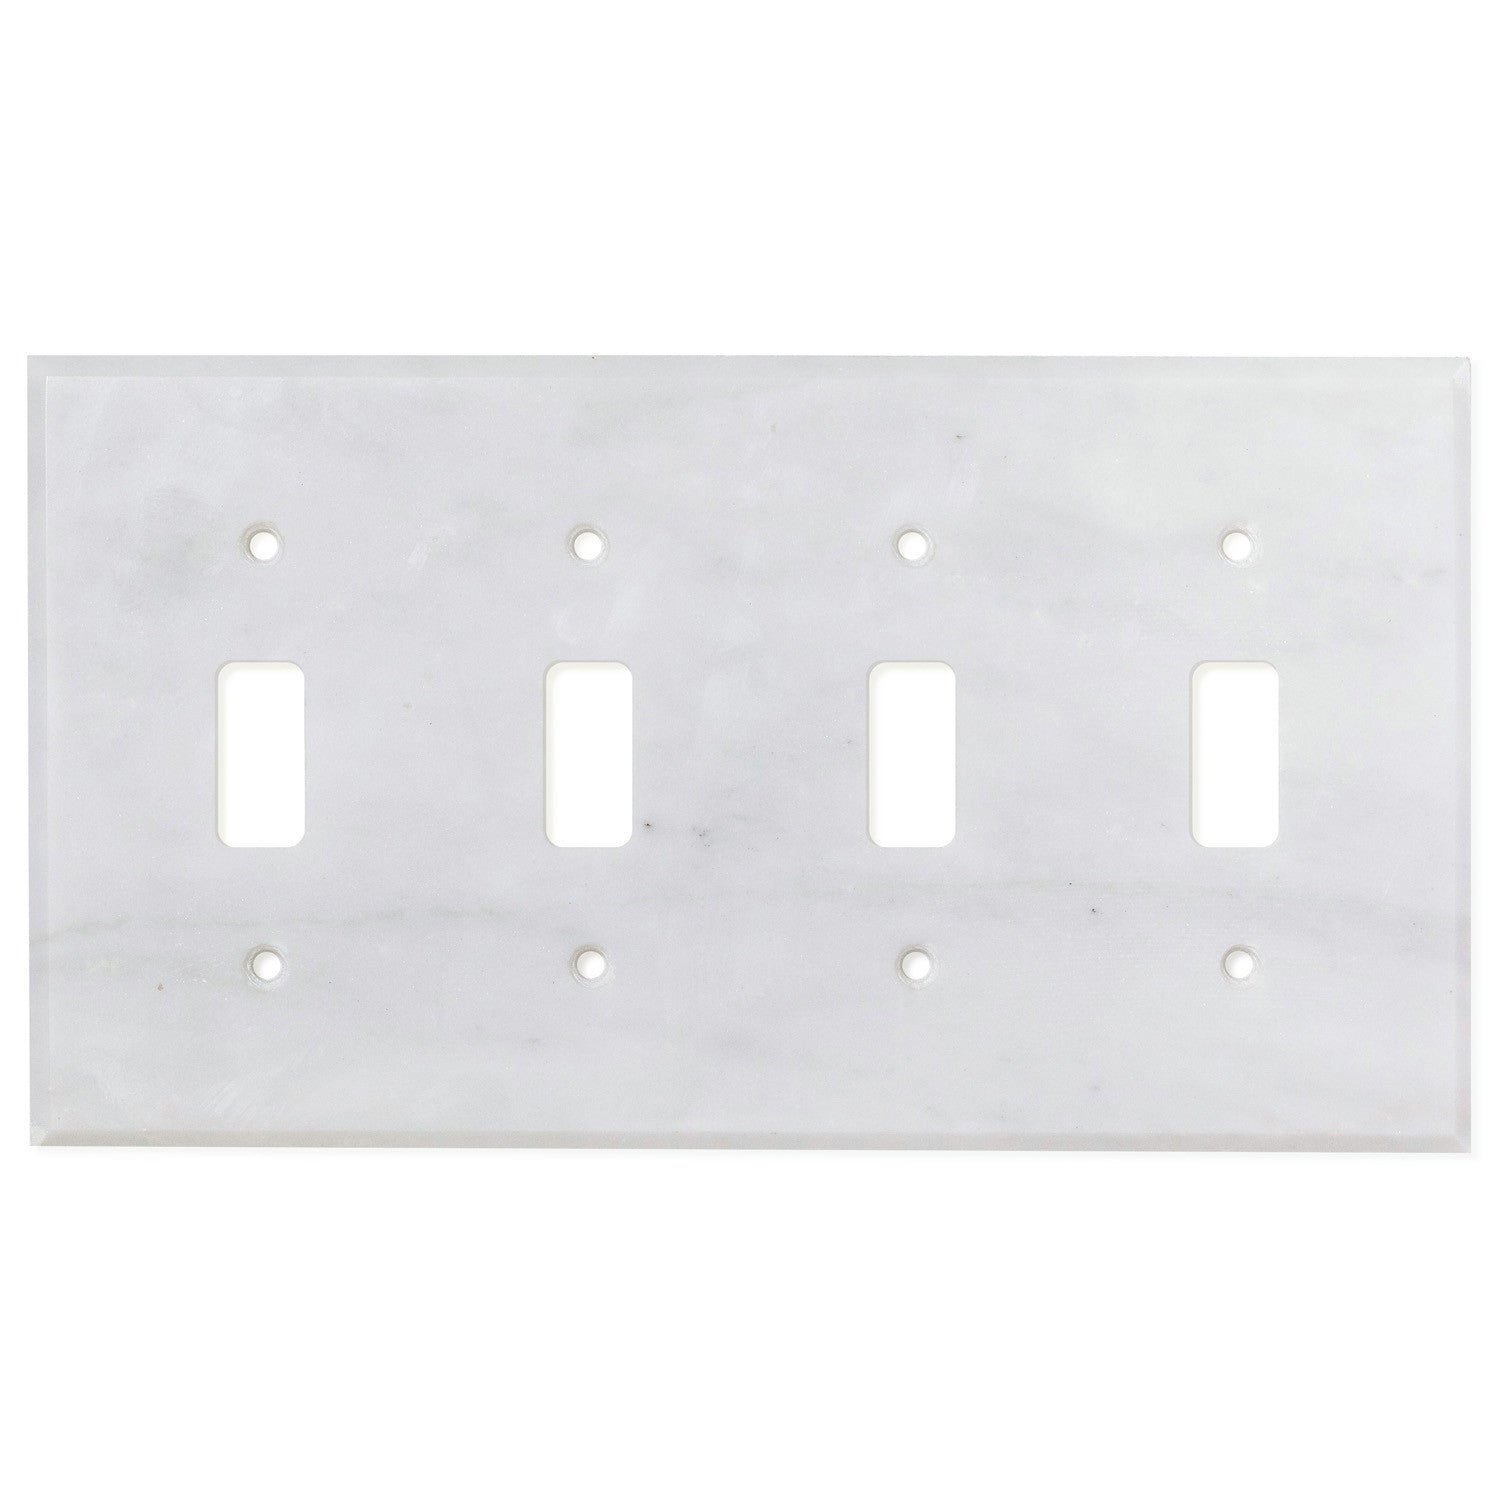 Bianco Carrara (Carrara White) Marble Switch Plate Cover, Polished (4 TOGGLE) - Tilephile